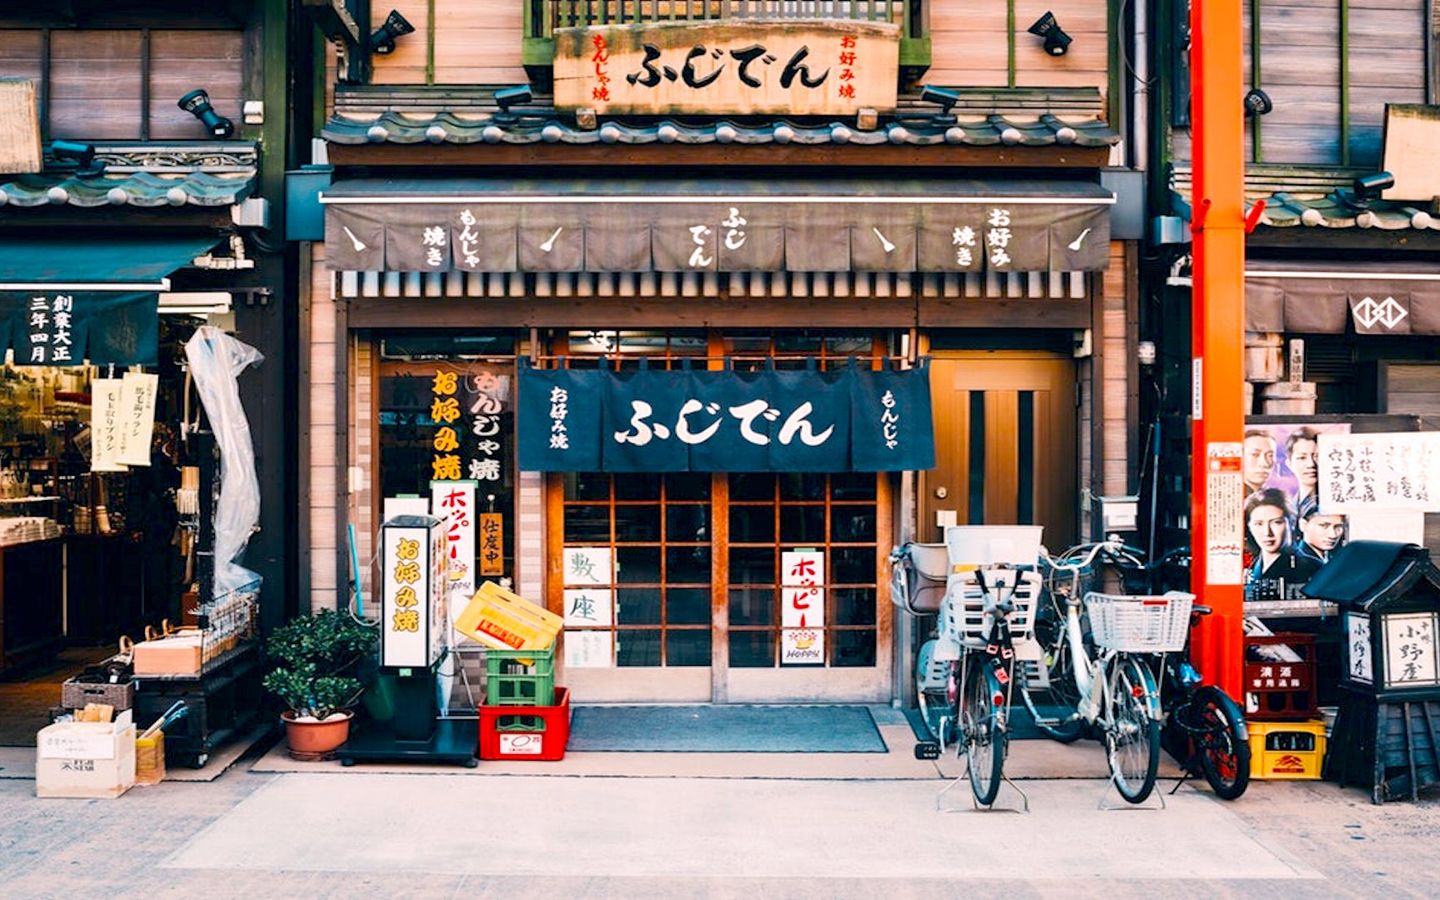 must visit restaurant in japan